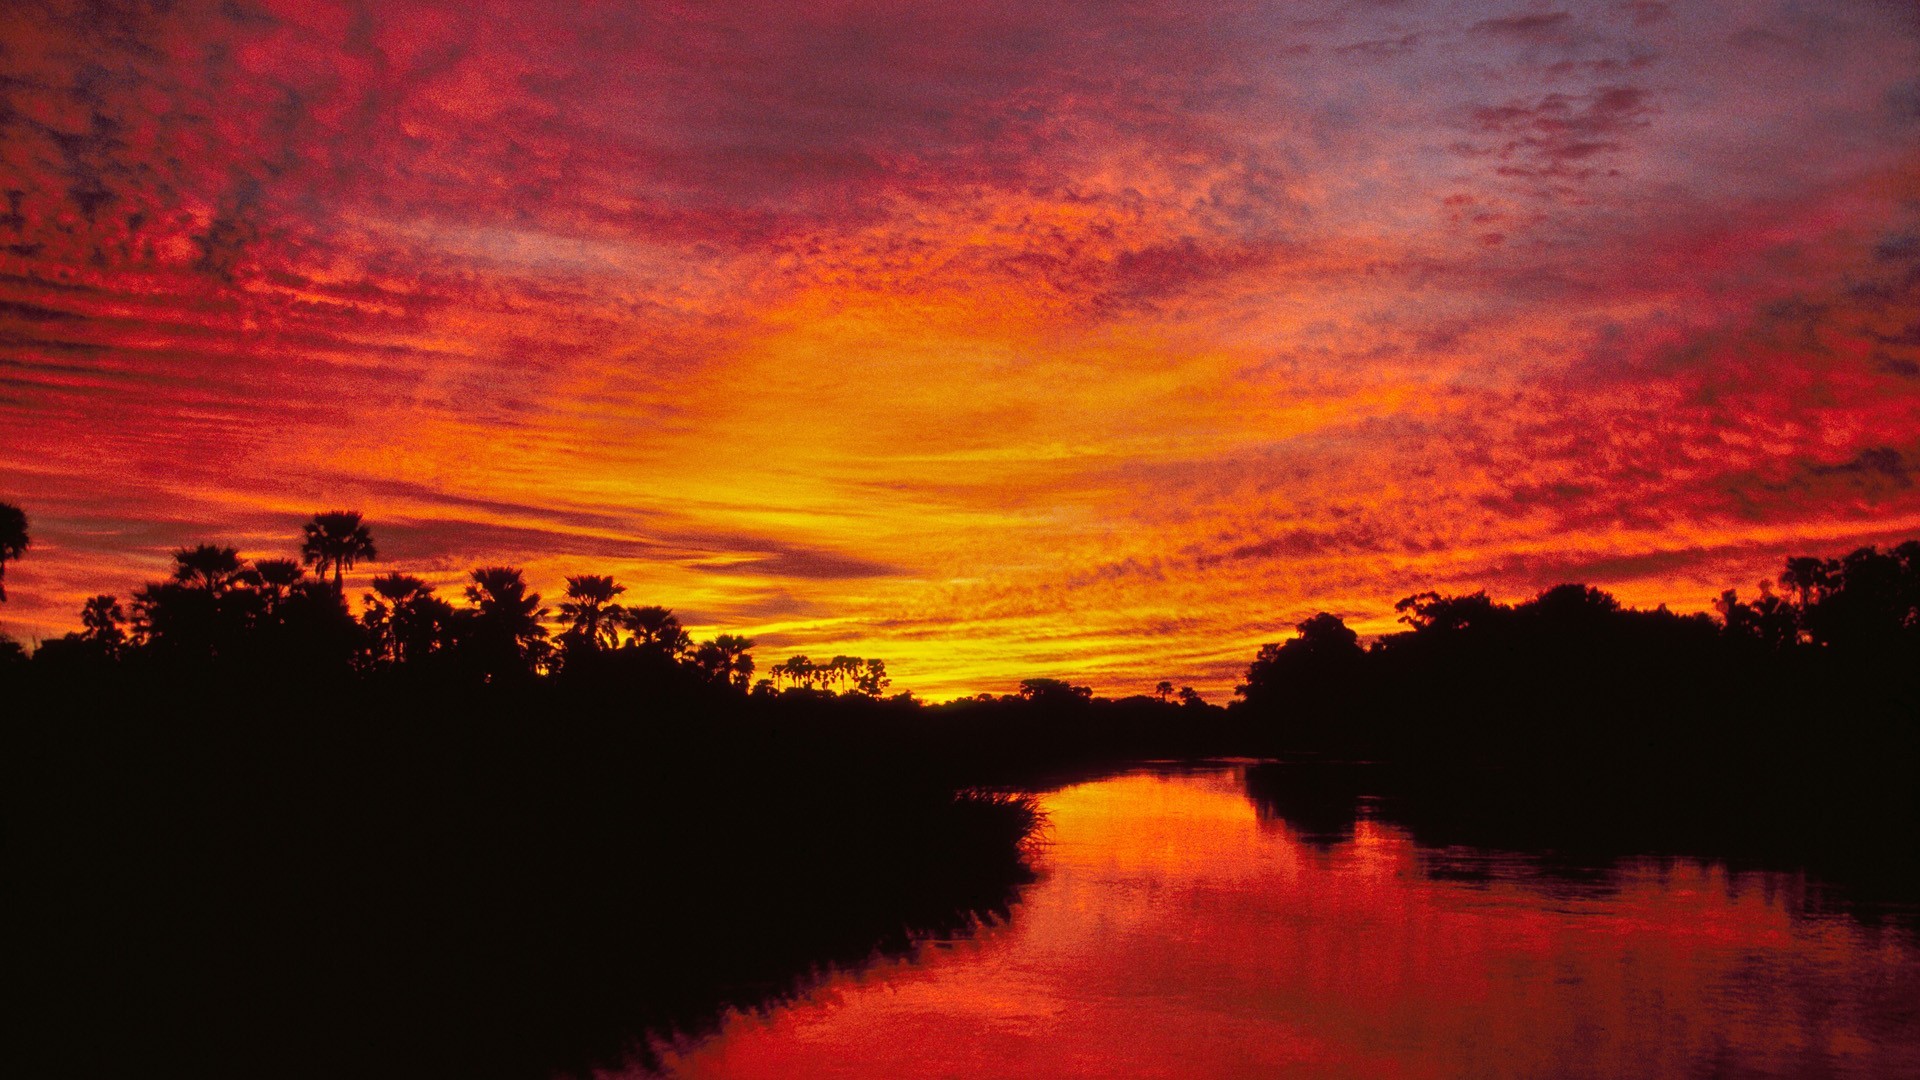 Macbook Tablet Display Cool Image Sunset Botswana Delta